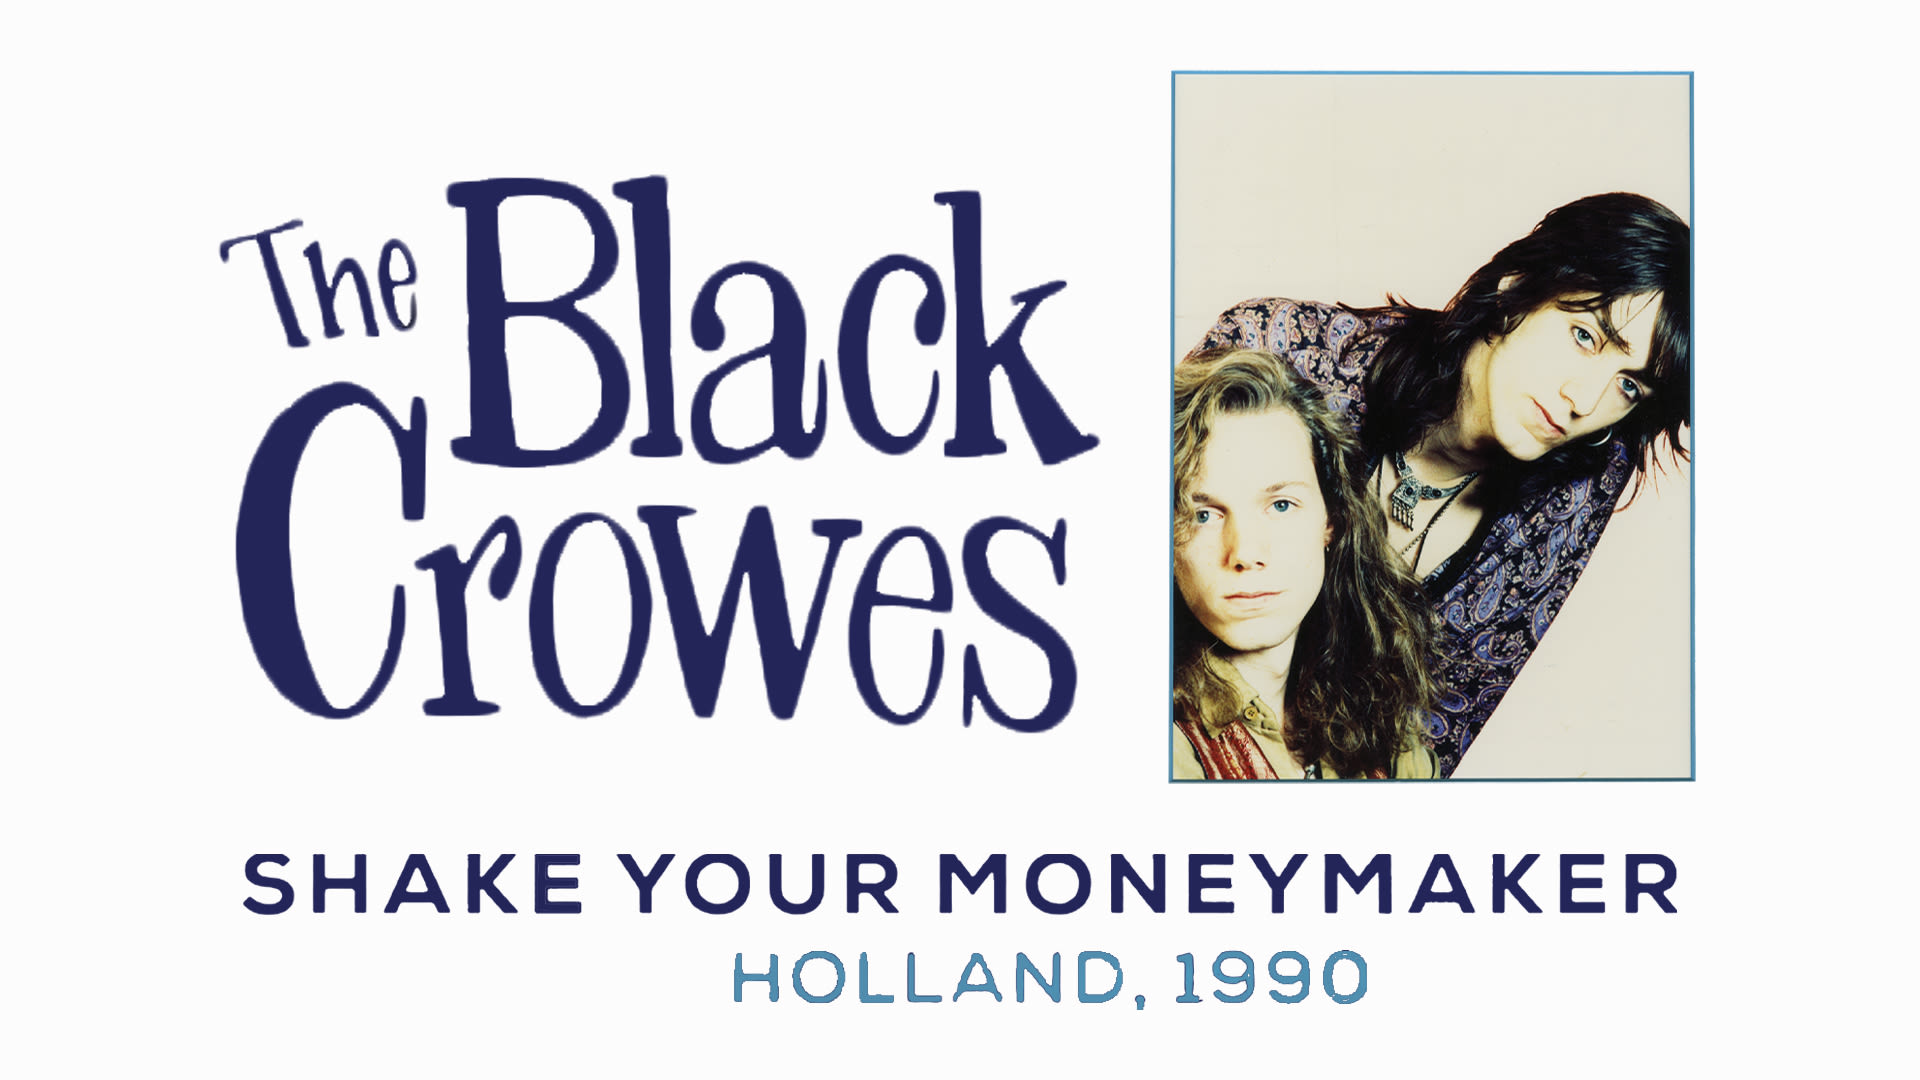 Shake Your Moneymaker Holland, 1990